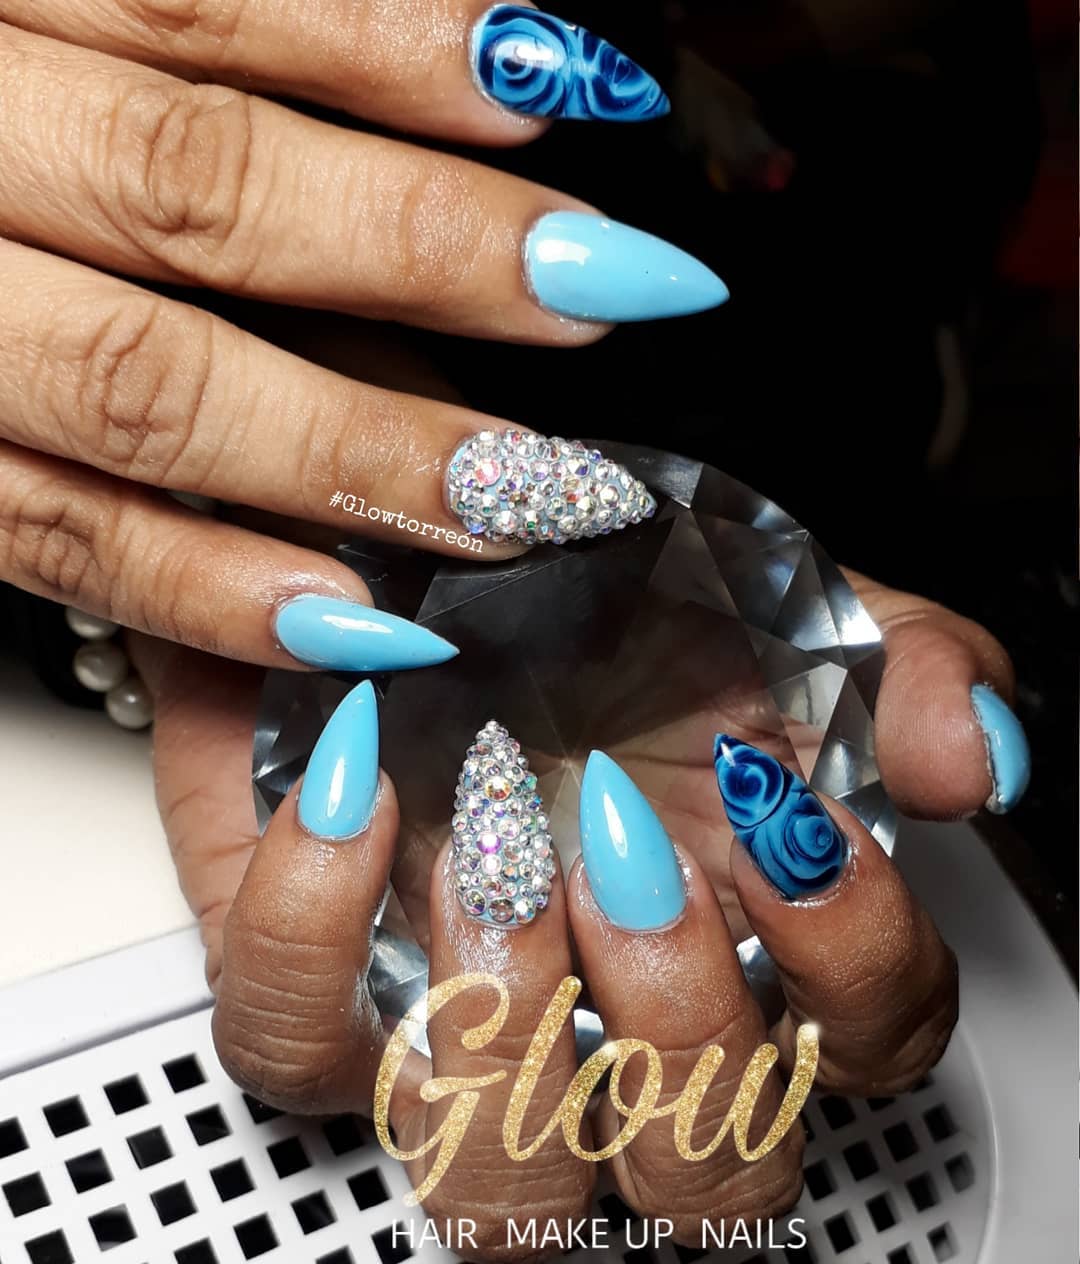 # nails #blue # unhas decoradas # decoraciondeuñas #nails #Glowtorreon #glownails ...